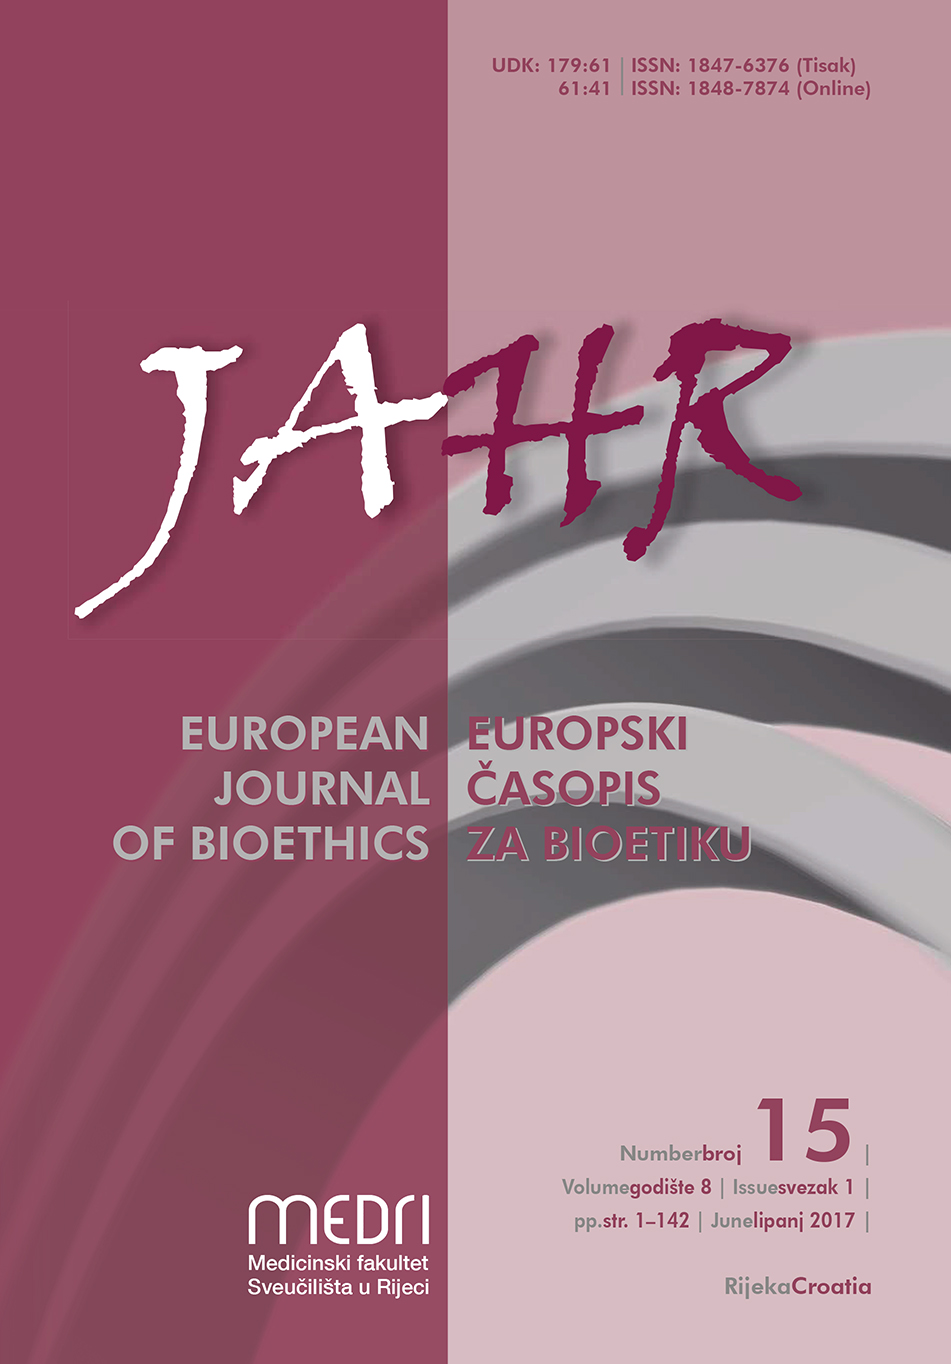 					View Vol. 8 No. 1 (2017): Jahr – European Journal of Bioethics
				